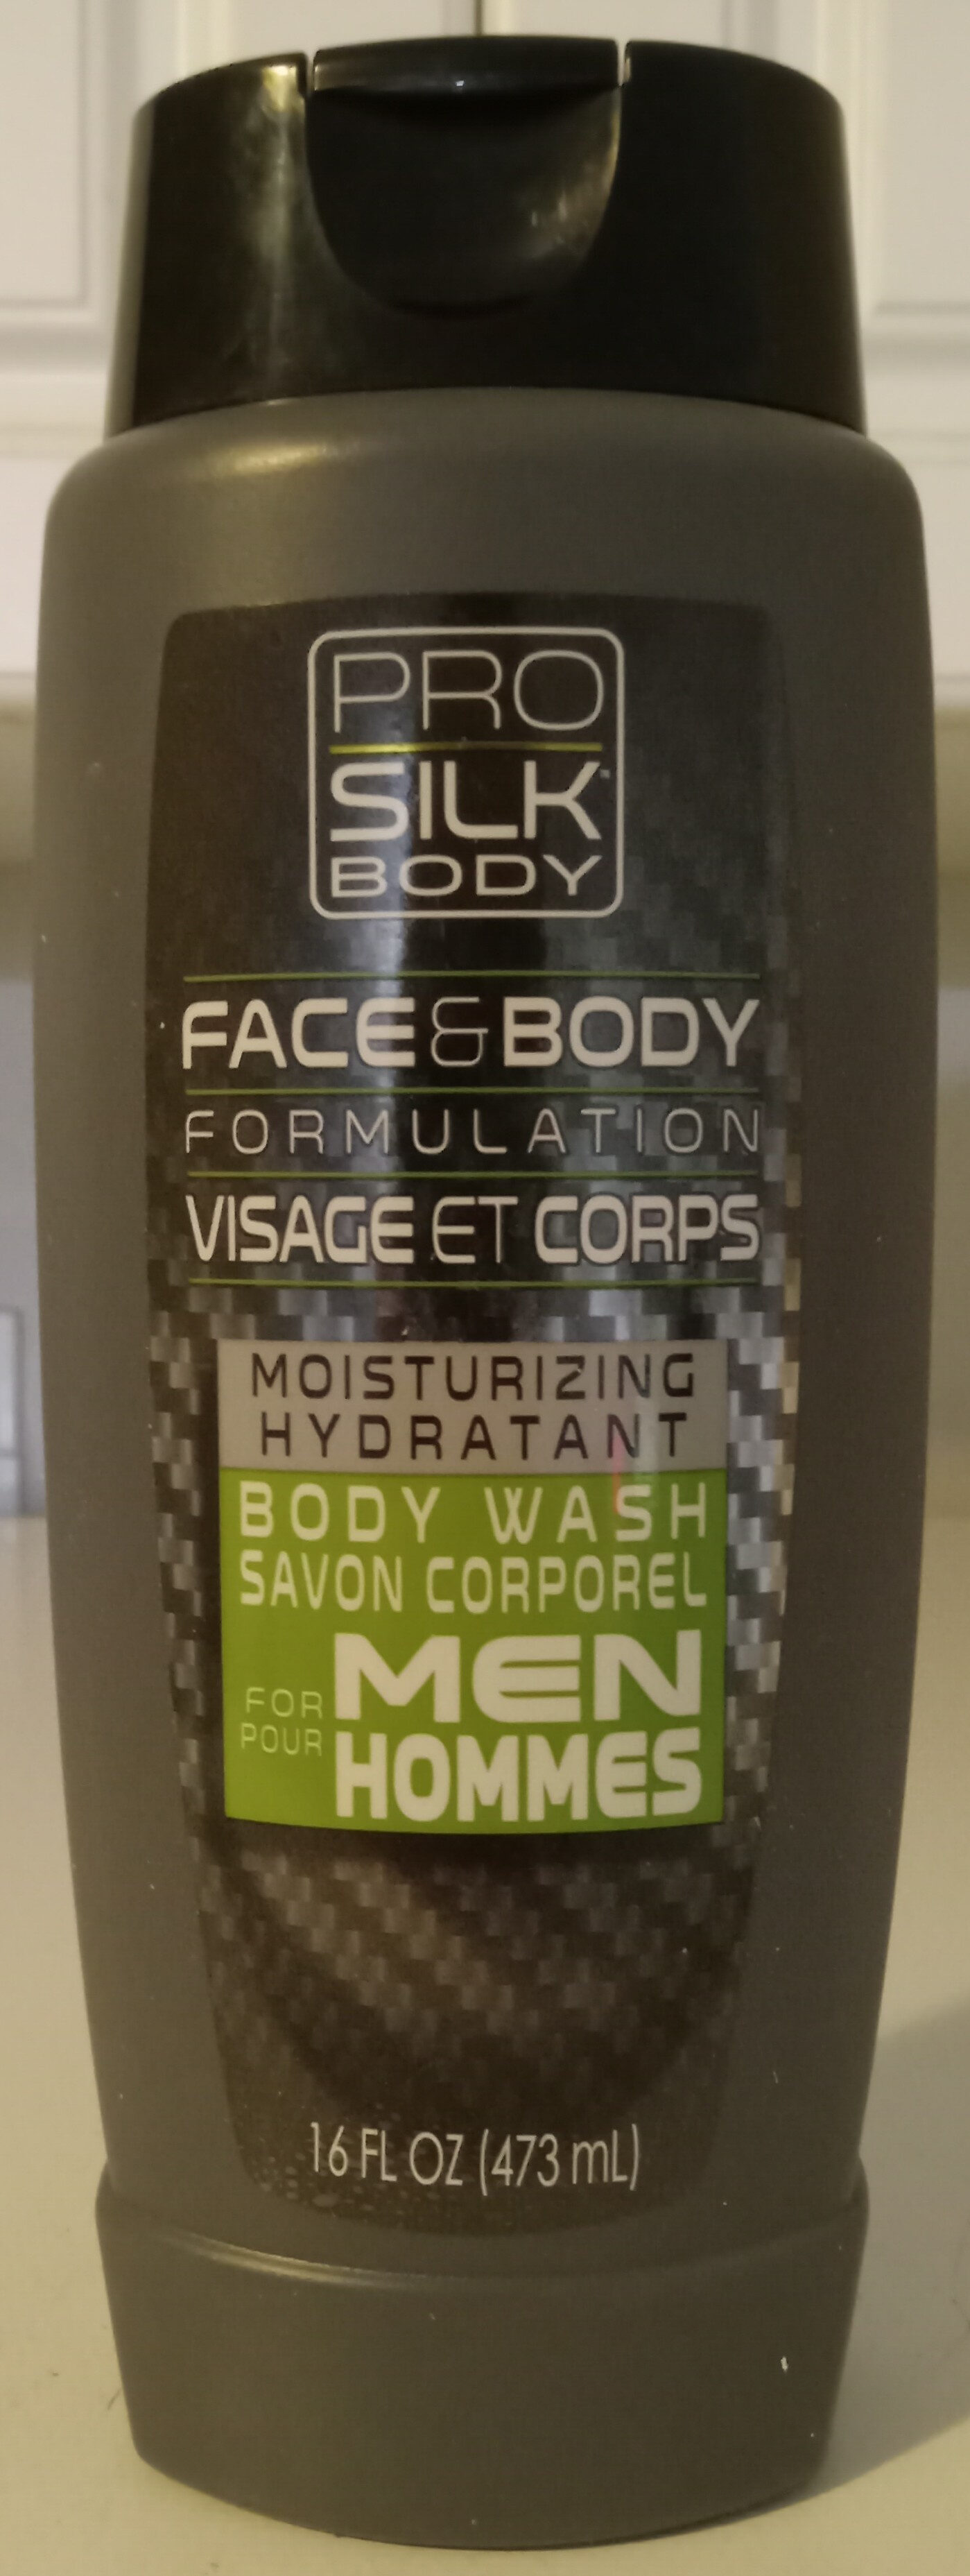 Face & Body Formulation Moisturizing Body Wash for Men - Продукт - en